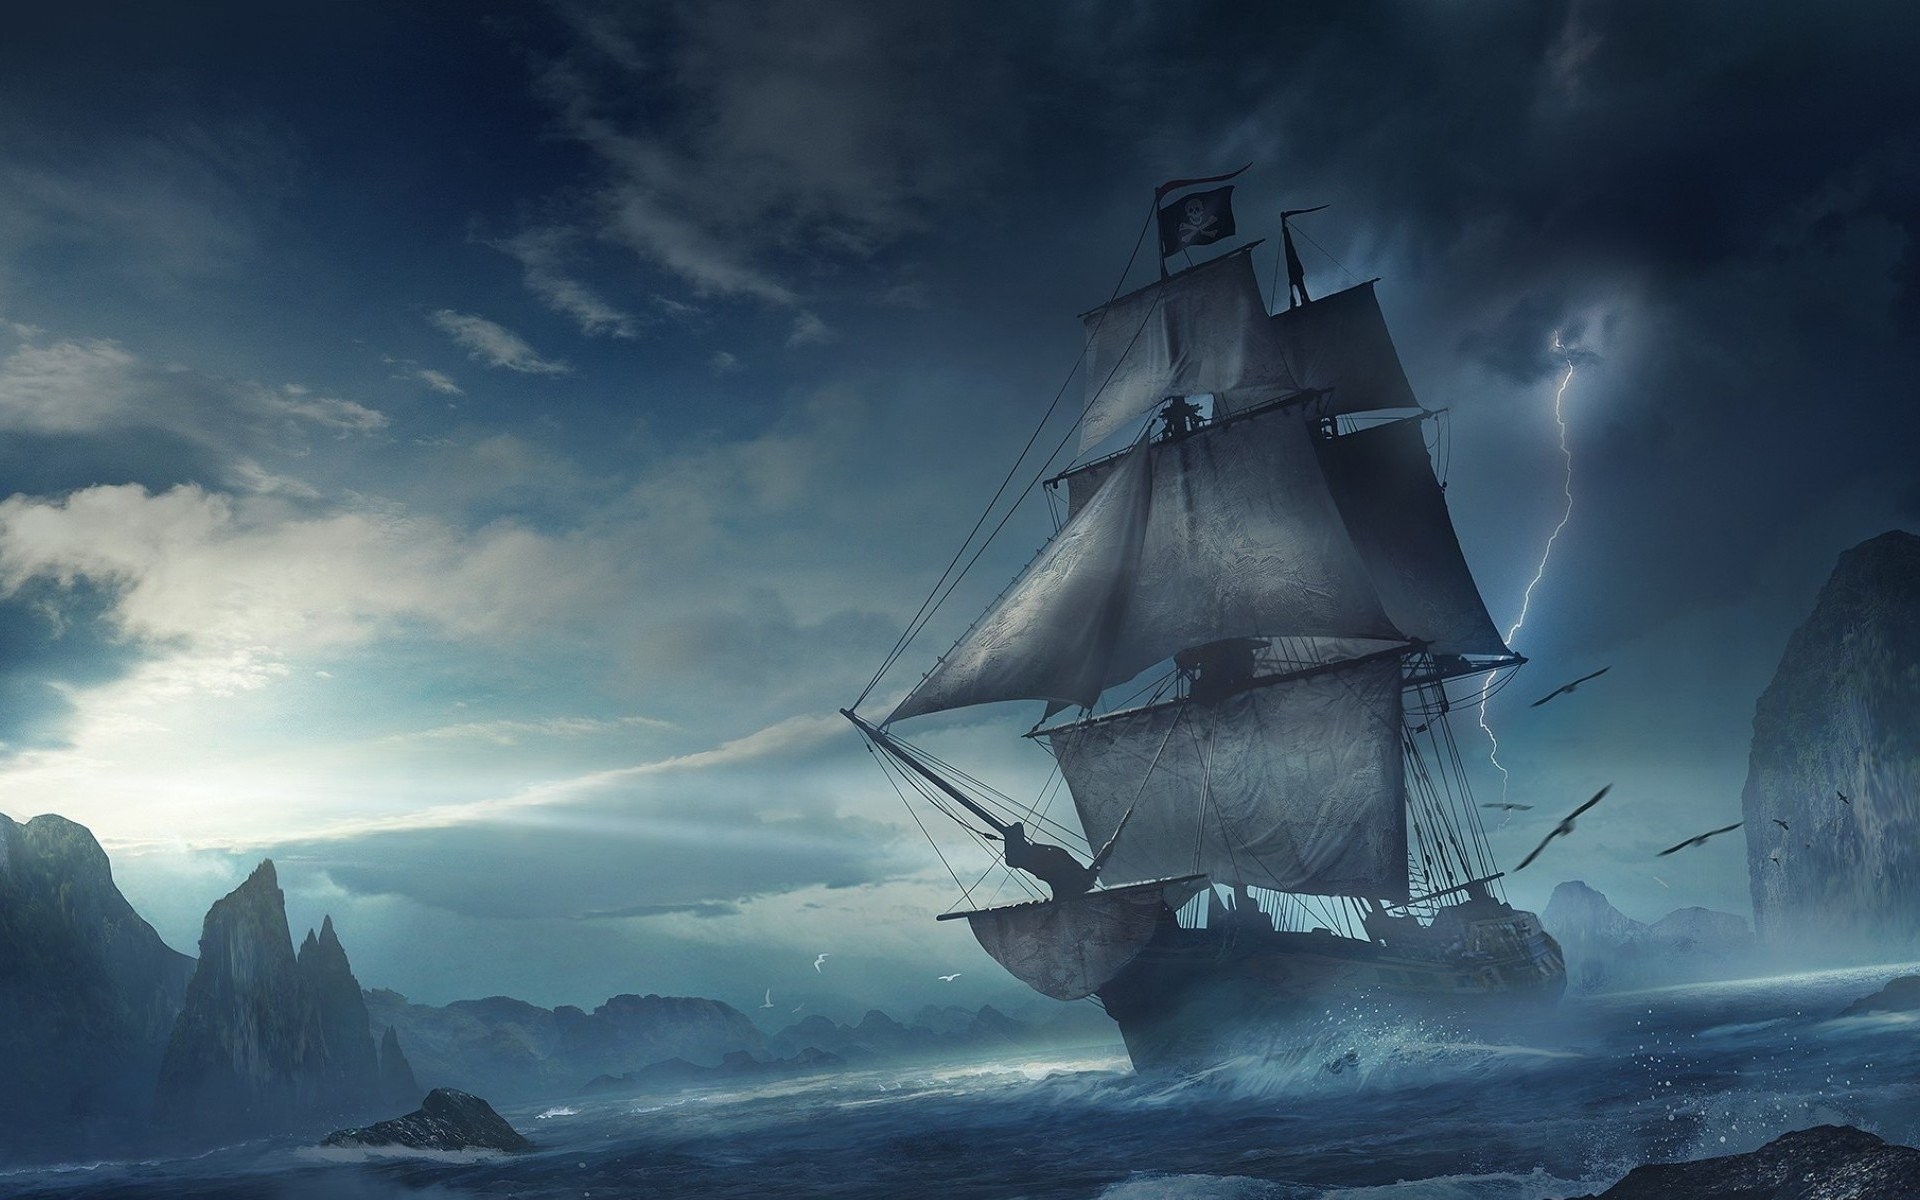 Pirate Ship wallpaper ·① Download free High Resolution ...